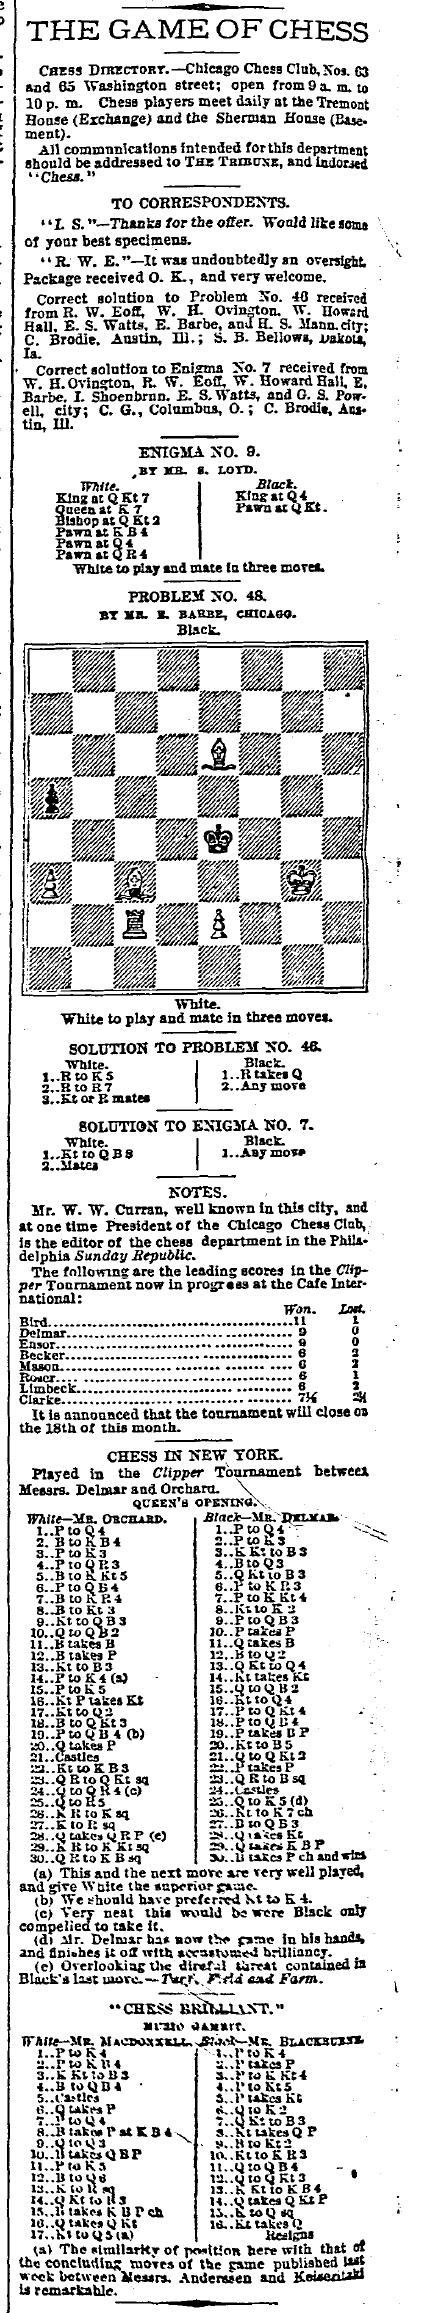 1876.10.15-01 Chicago Tribune.jpg